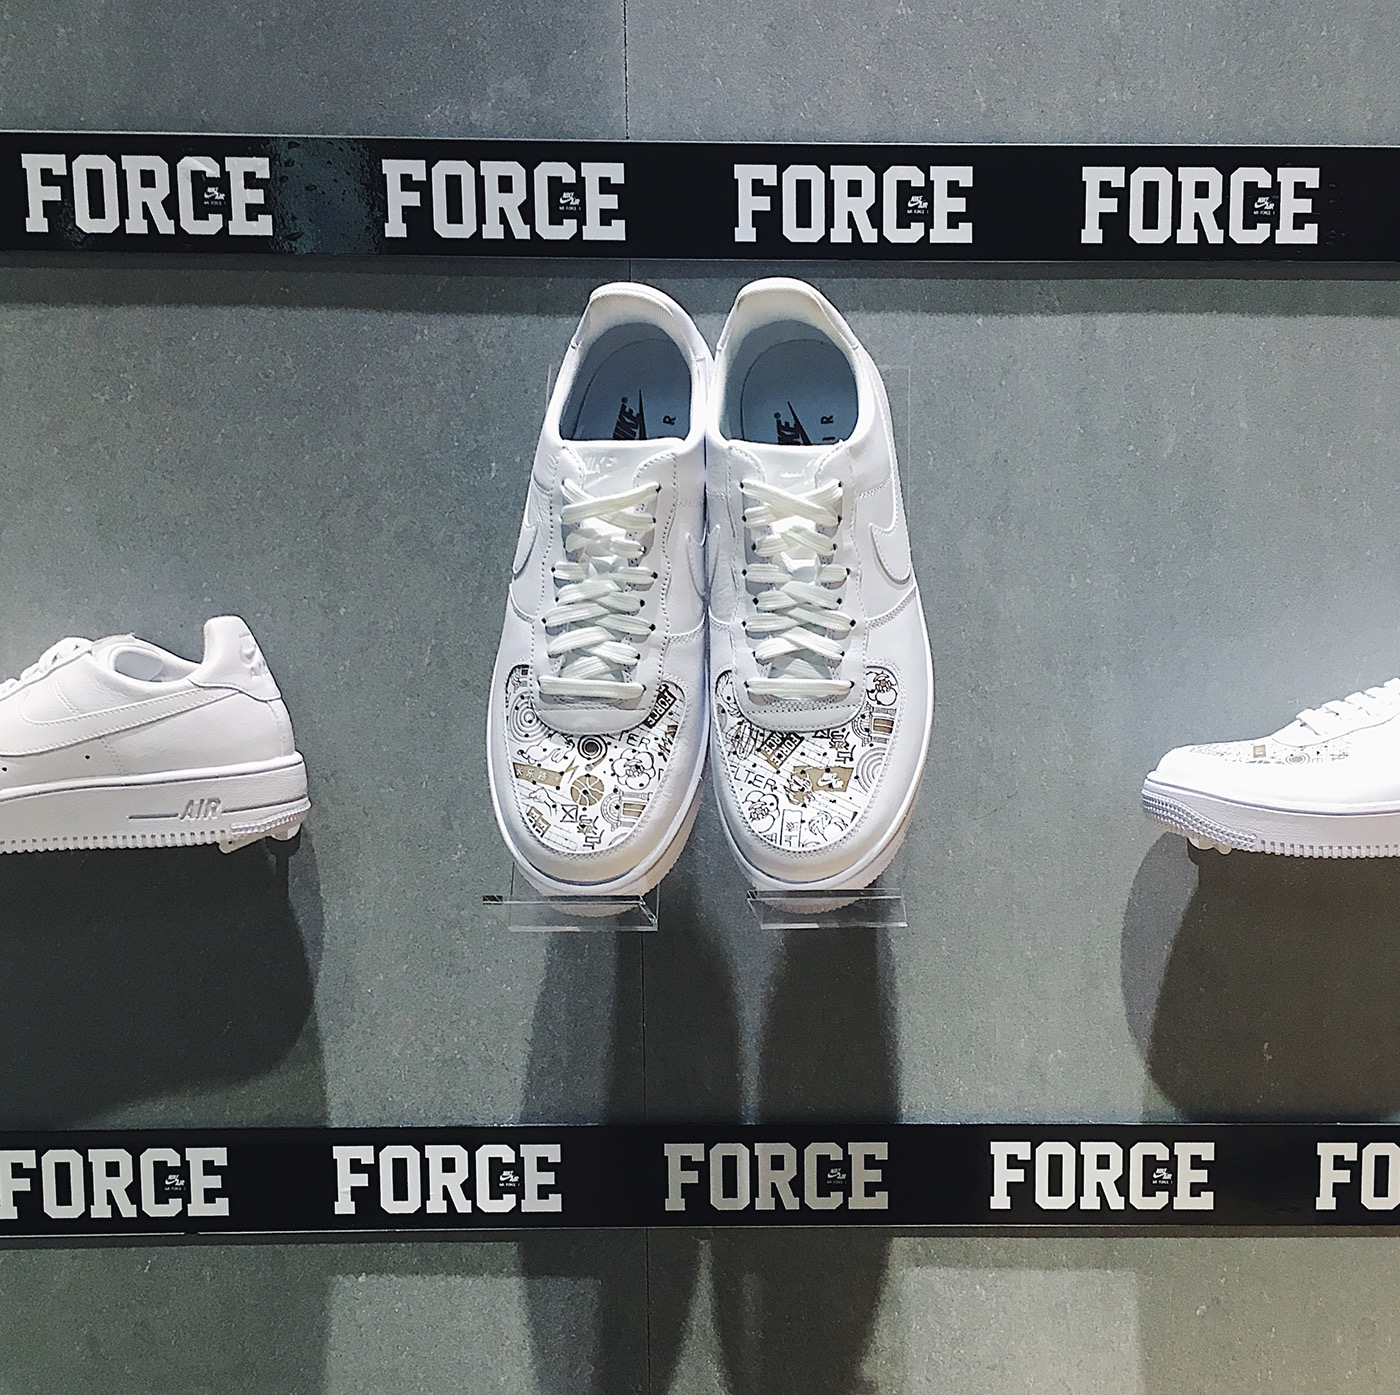 airforce1 Nike Shoe nike limited edition pattern Laser Engraved af1 shanghai shanghai culture